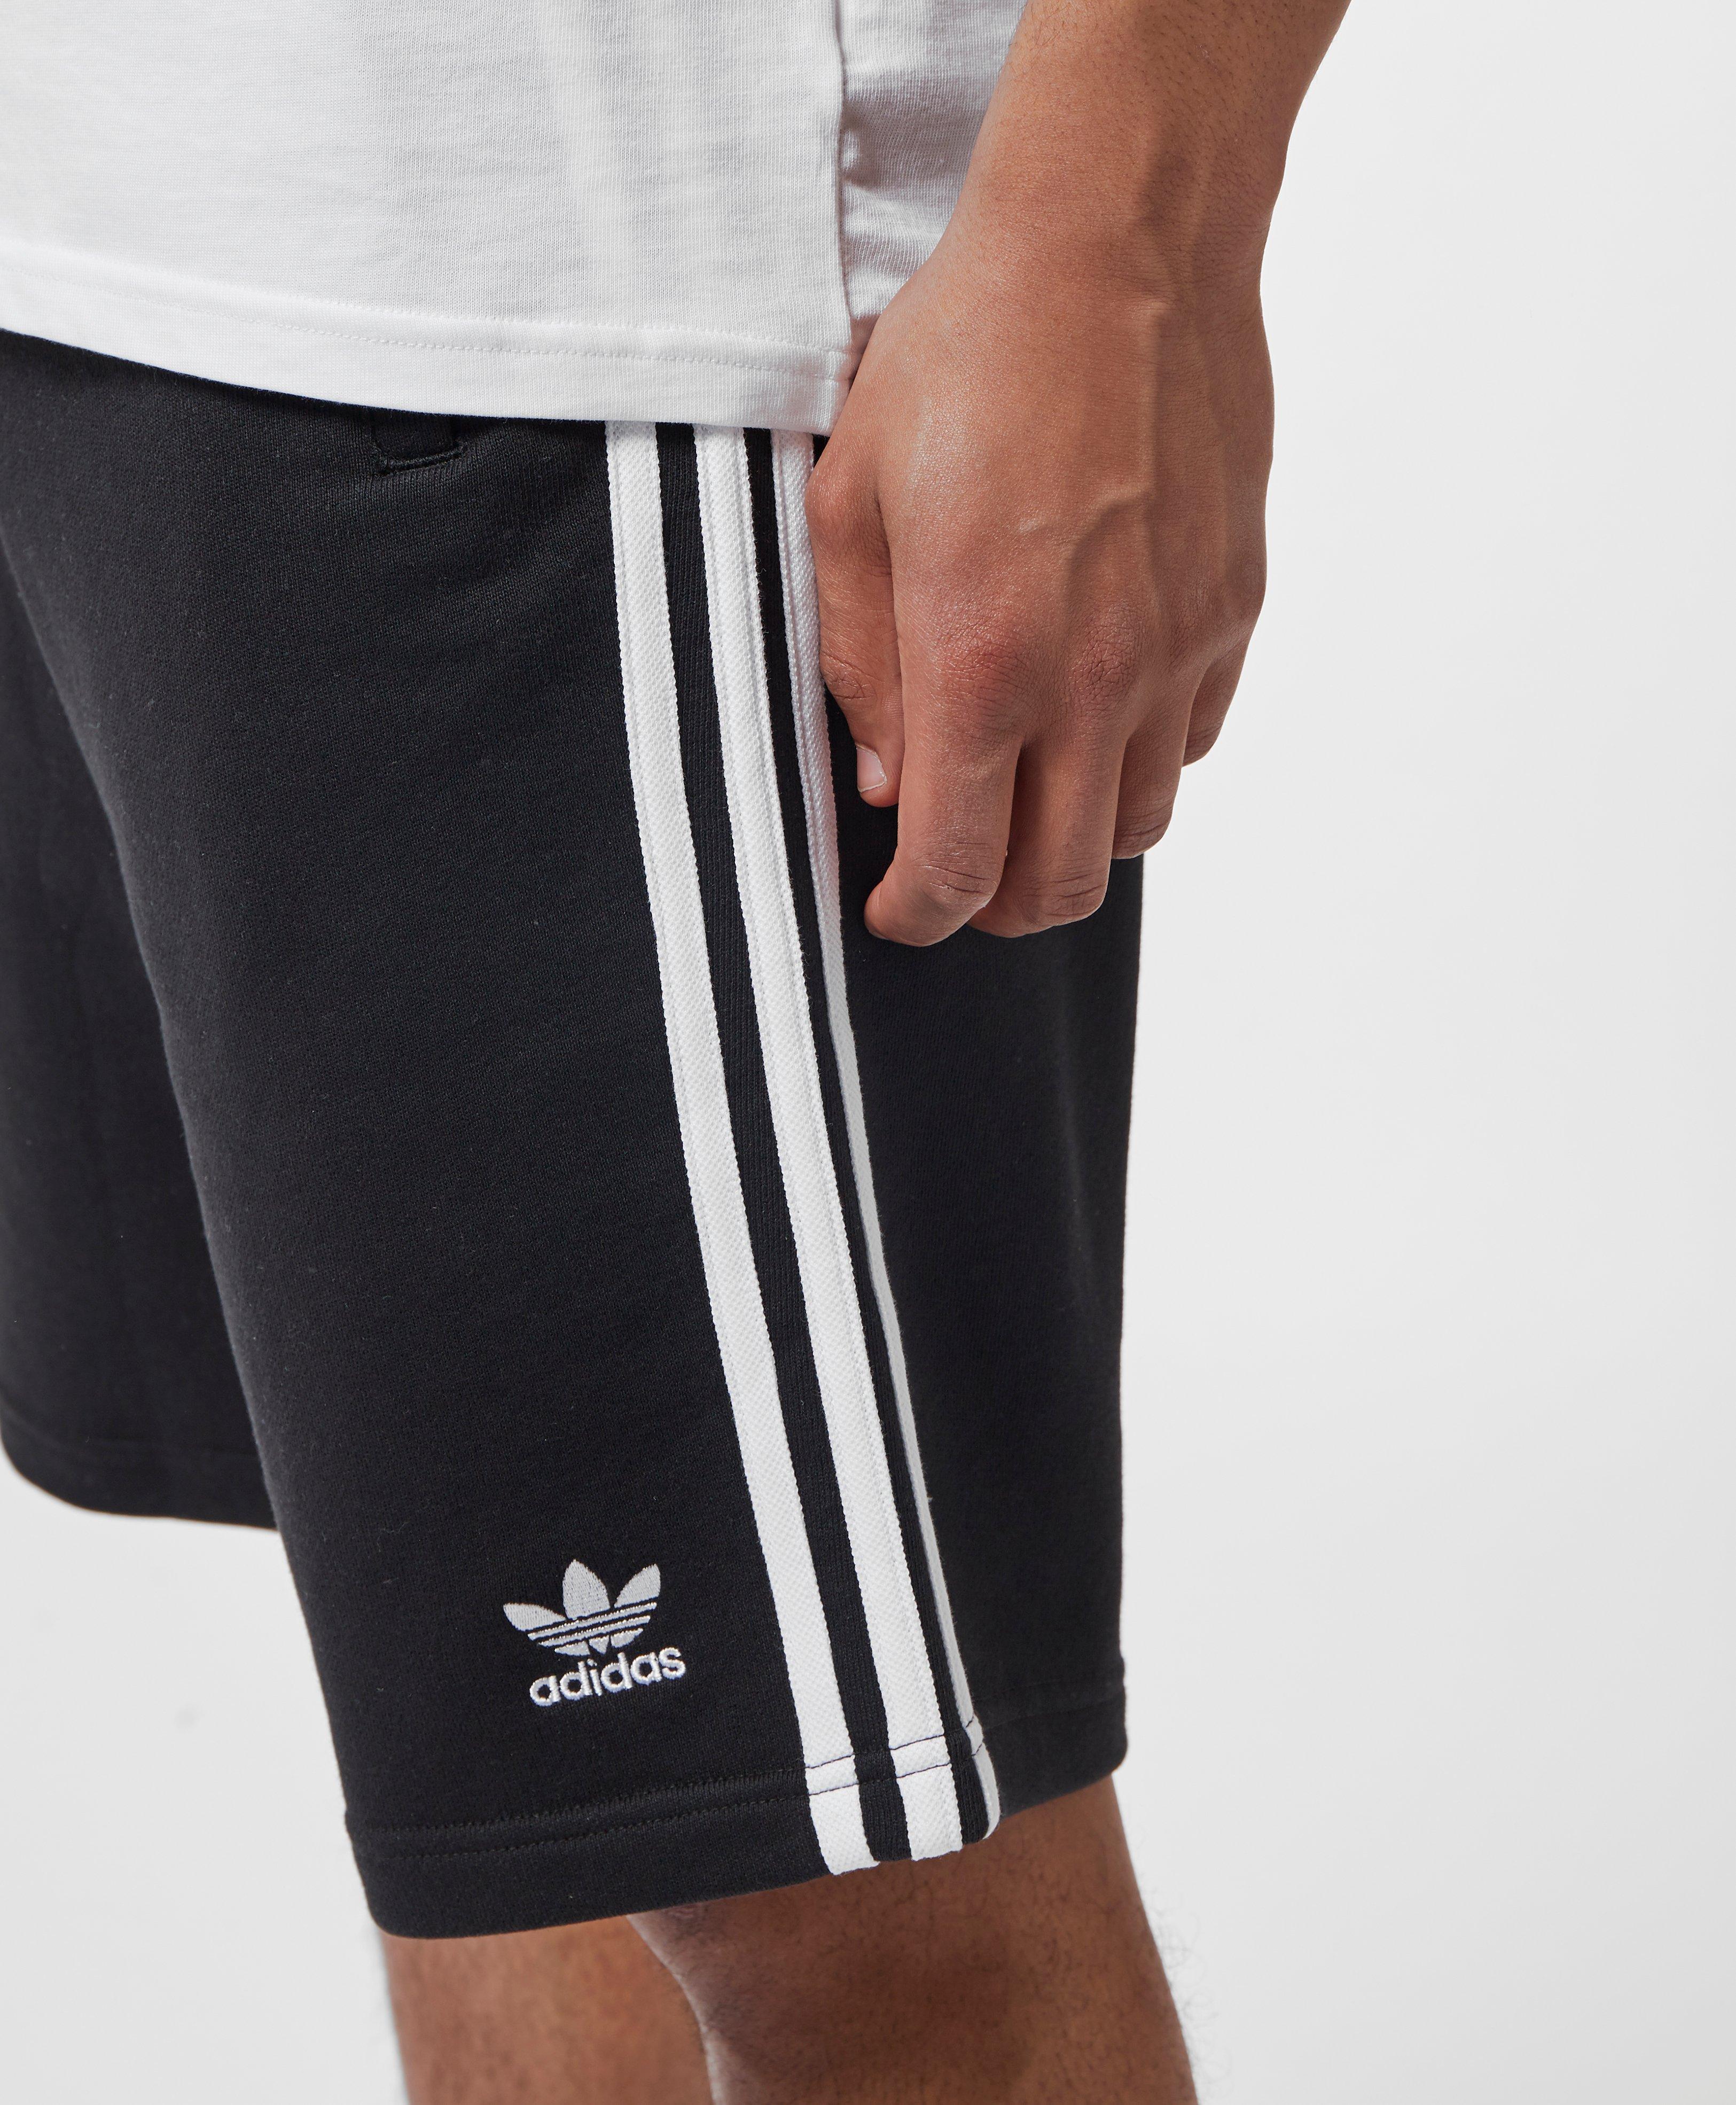 adidas Originals 3-stripes Fleece Shorts in Black for Men - Lyst